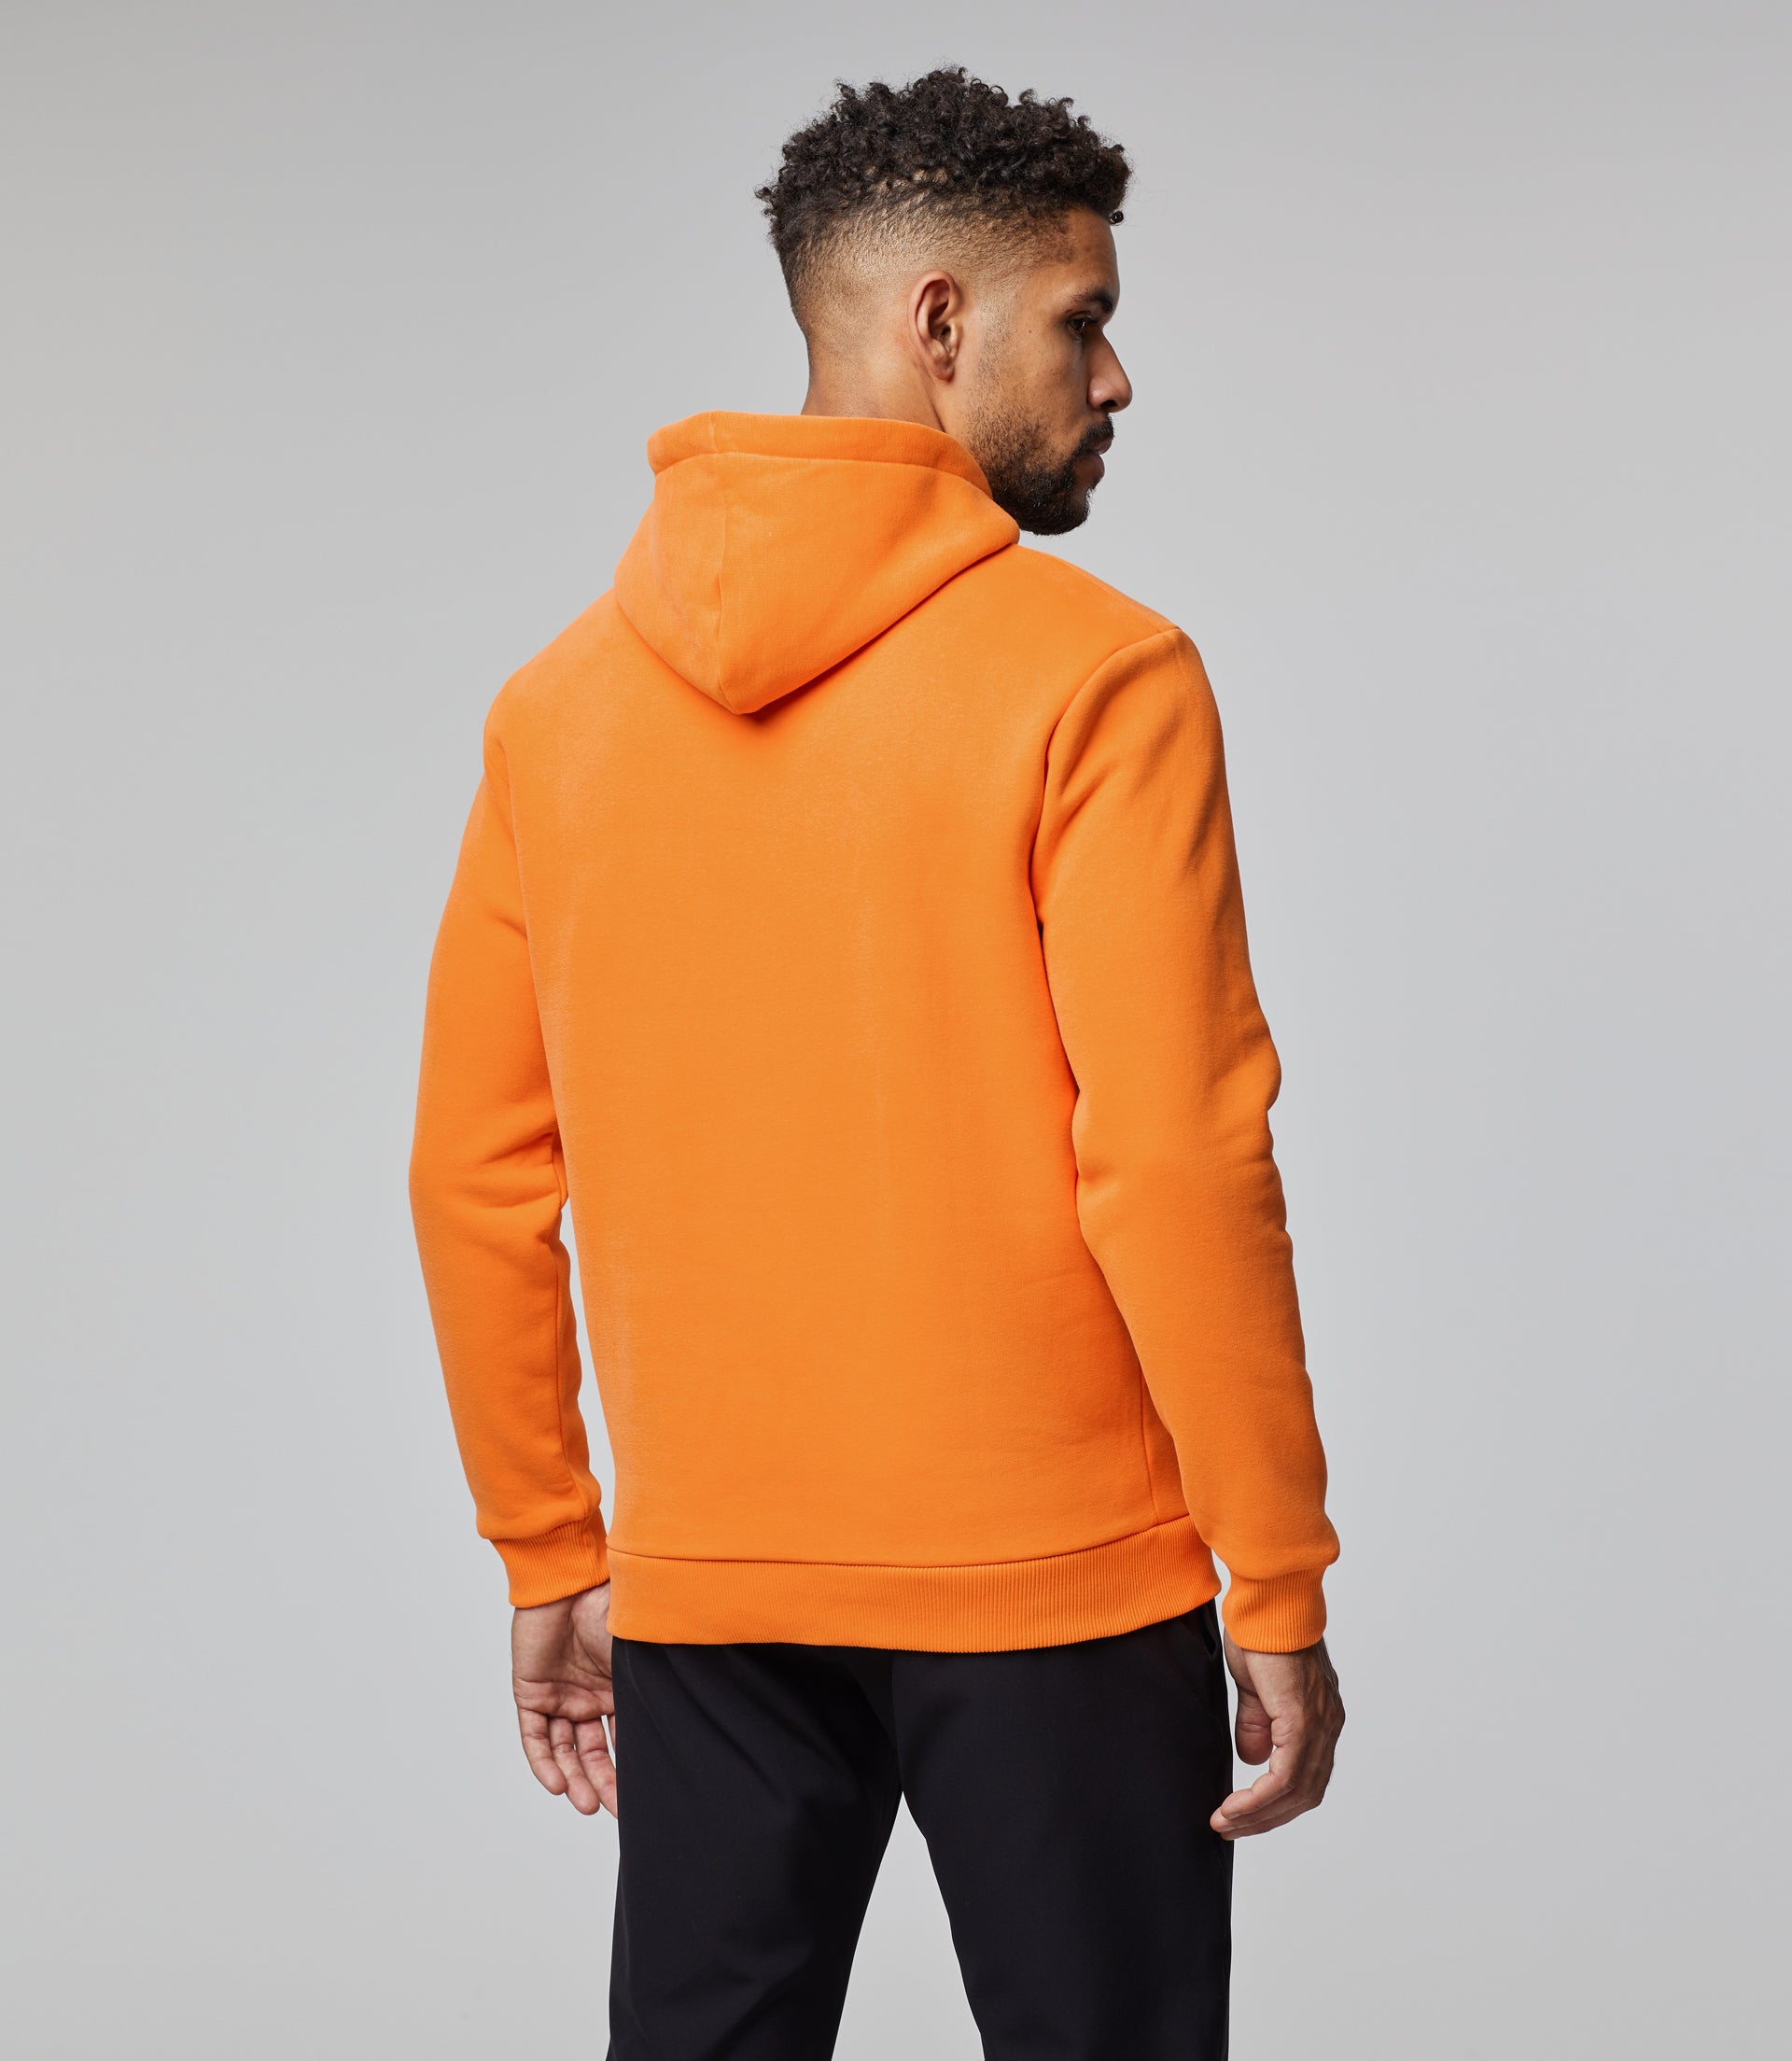 Mclaren F1 Men's Large Logo Hooded Sweatshirt Orange